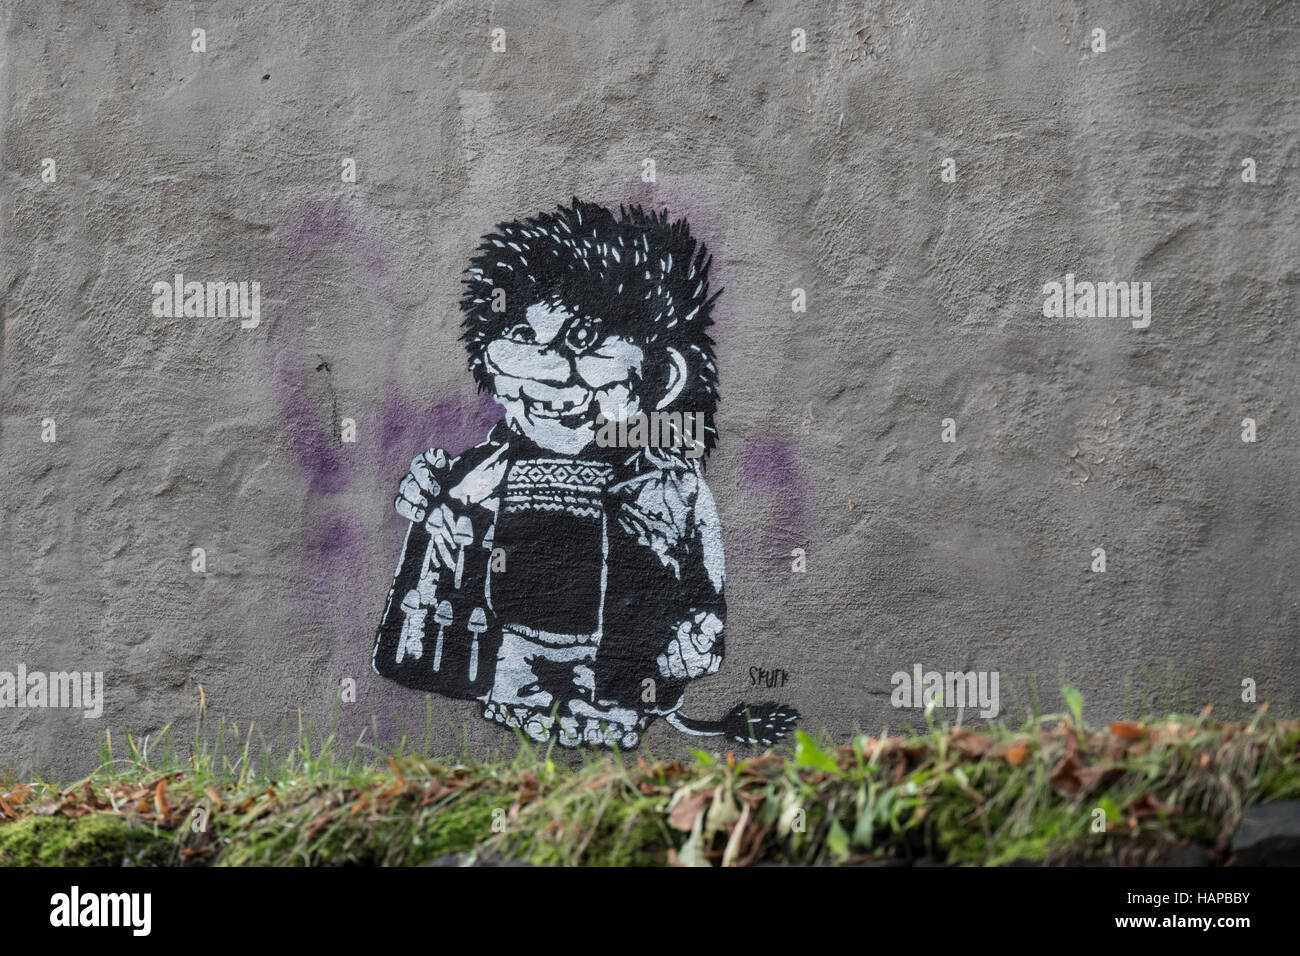 Street art Troll sprayed on wall at Bergen docks, Norway. Stock Photo